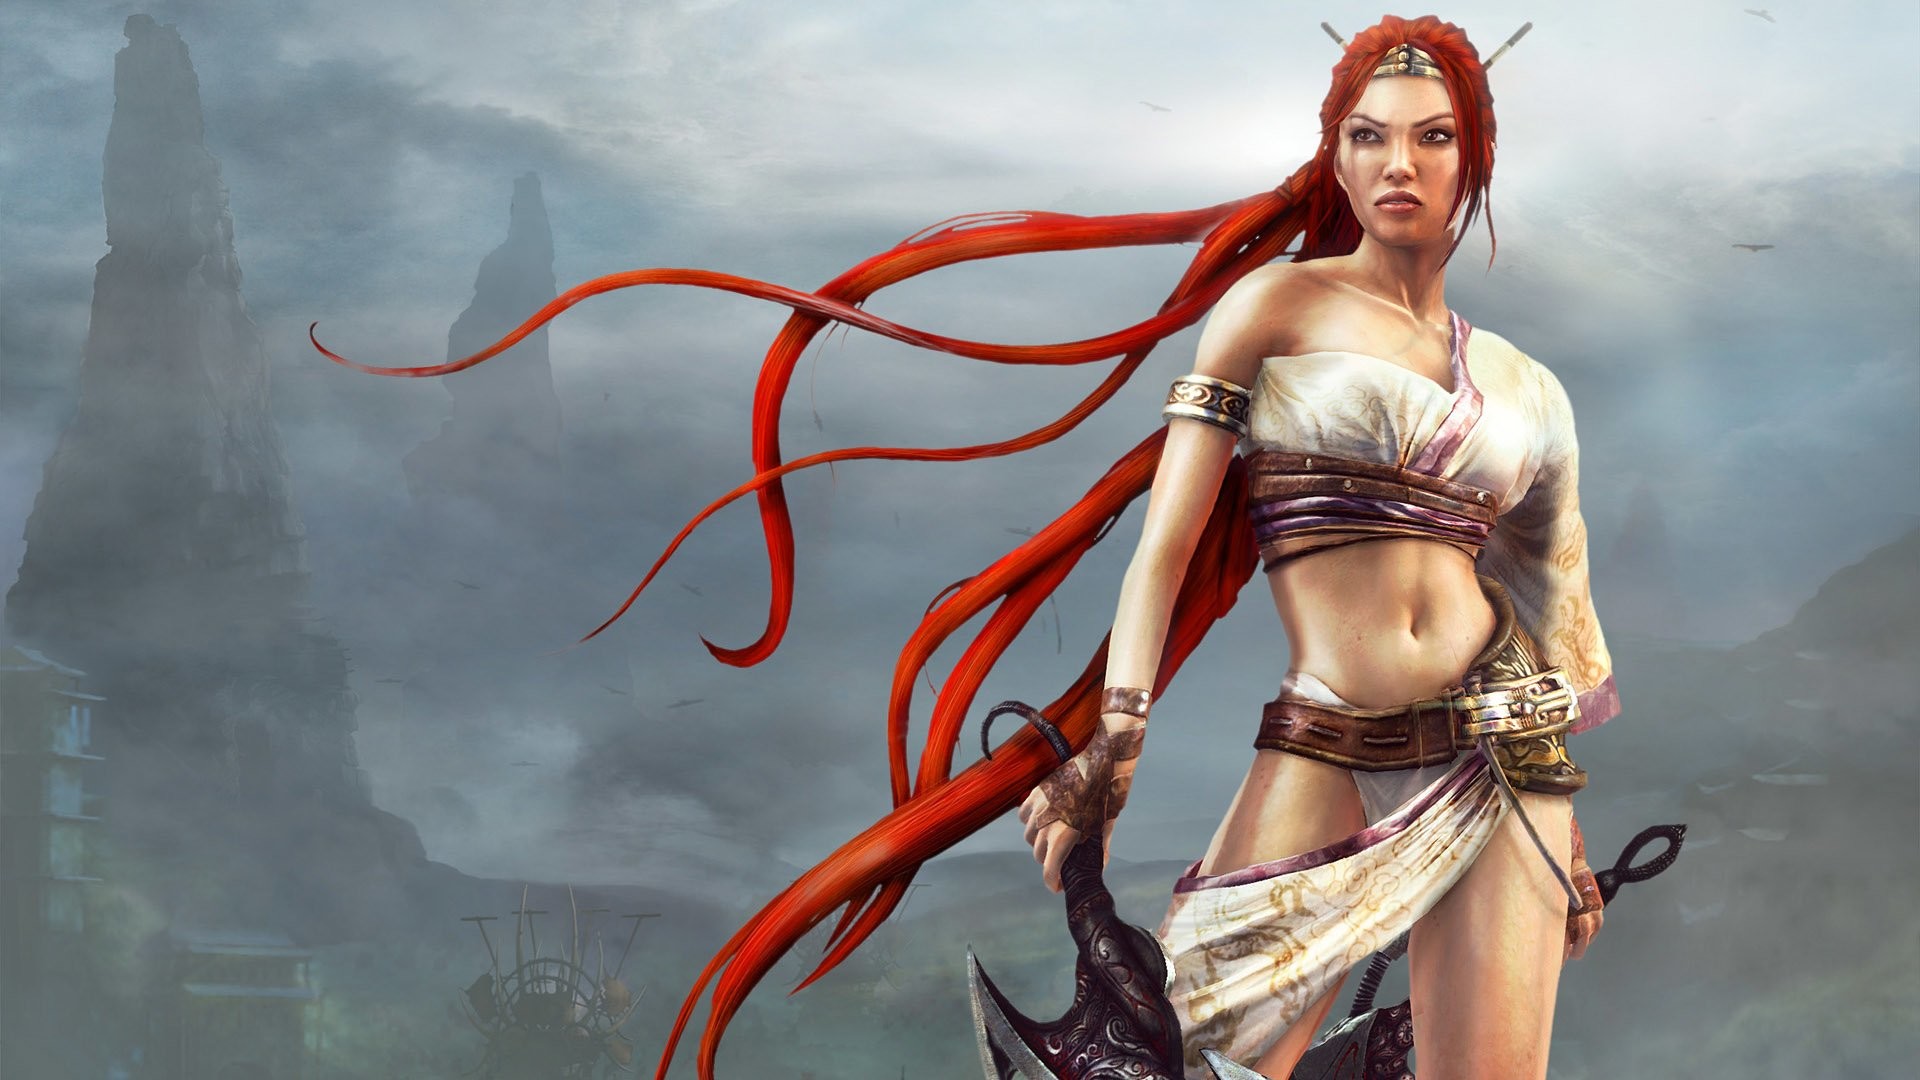 1920x1080 Video Game - Heavenly Sword Fantasy Woman Warrior Woman Girl Redhead  Wallpaper